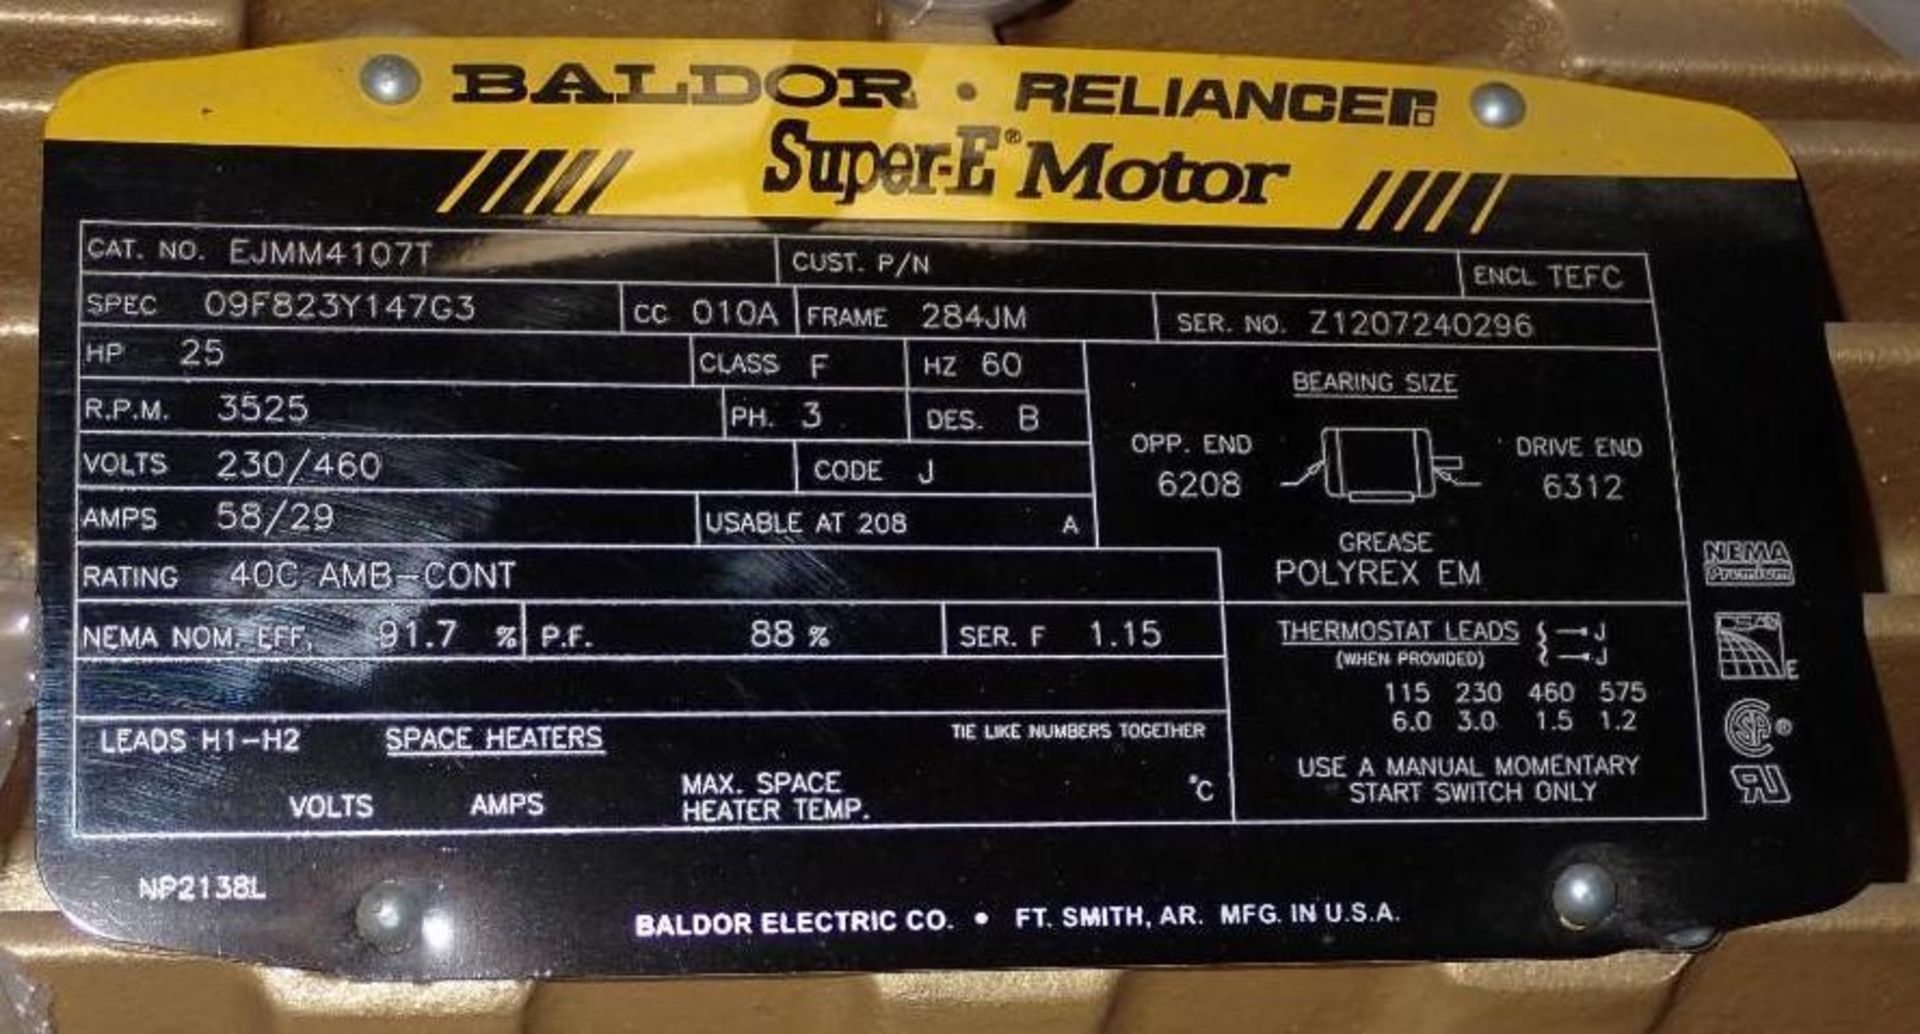 25 HP Baldor #EJMM4107T Super-E Motor - Image 5 of 5